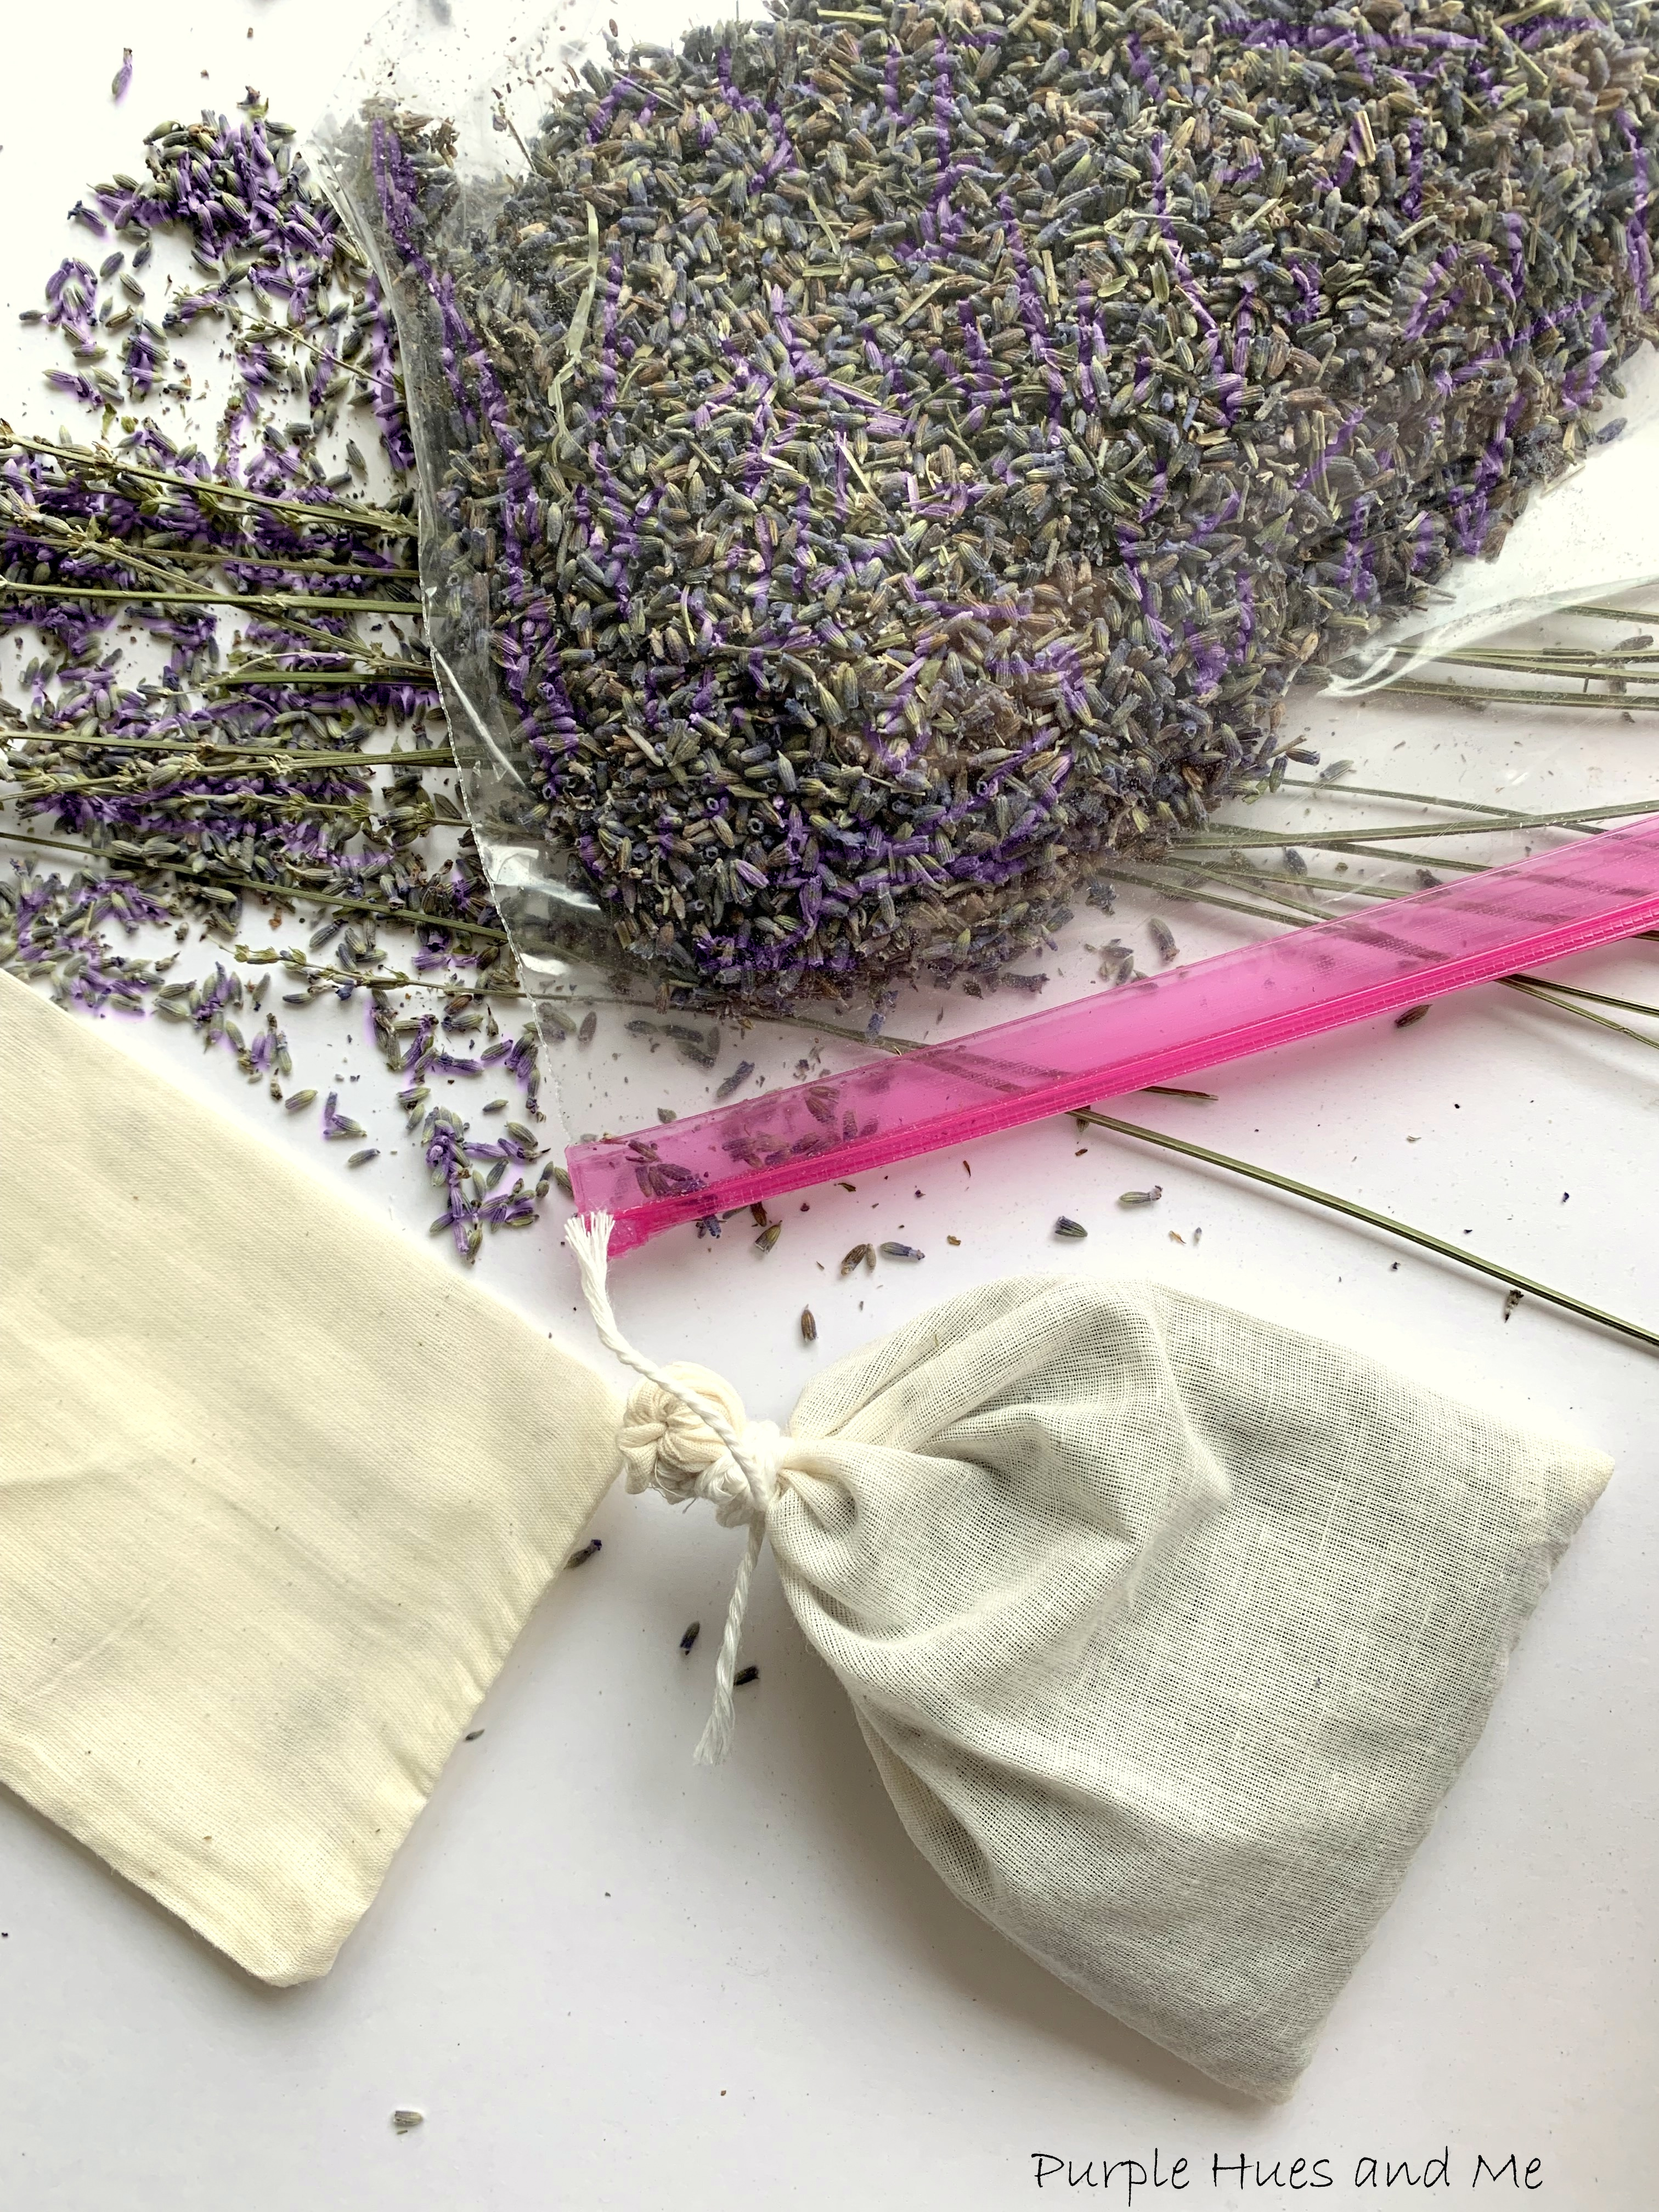 Easy DIY Lavender-Scented Bags